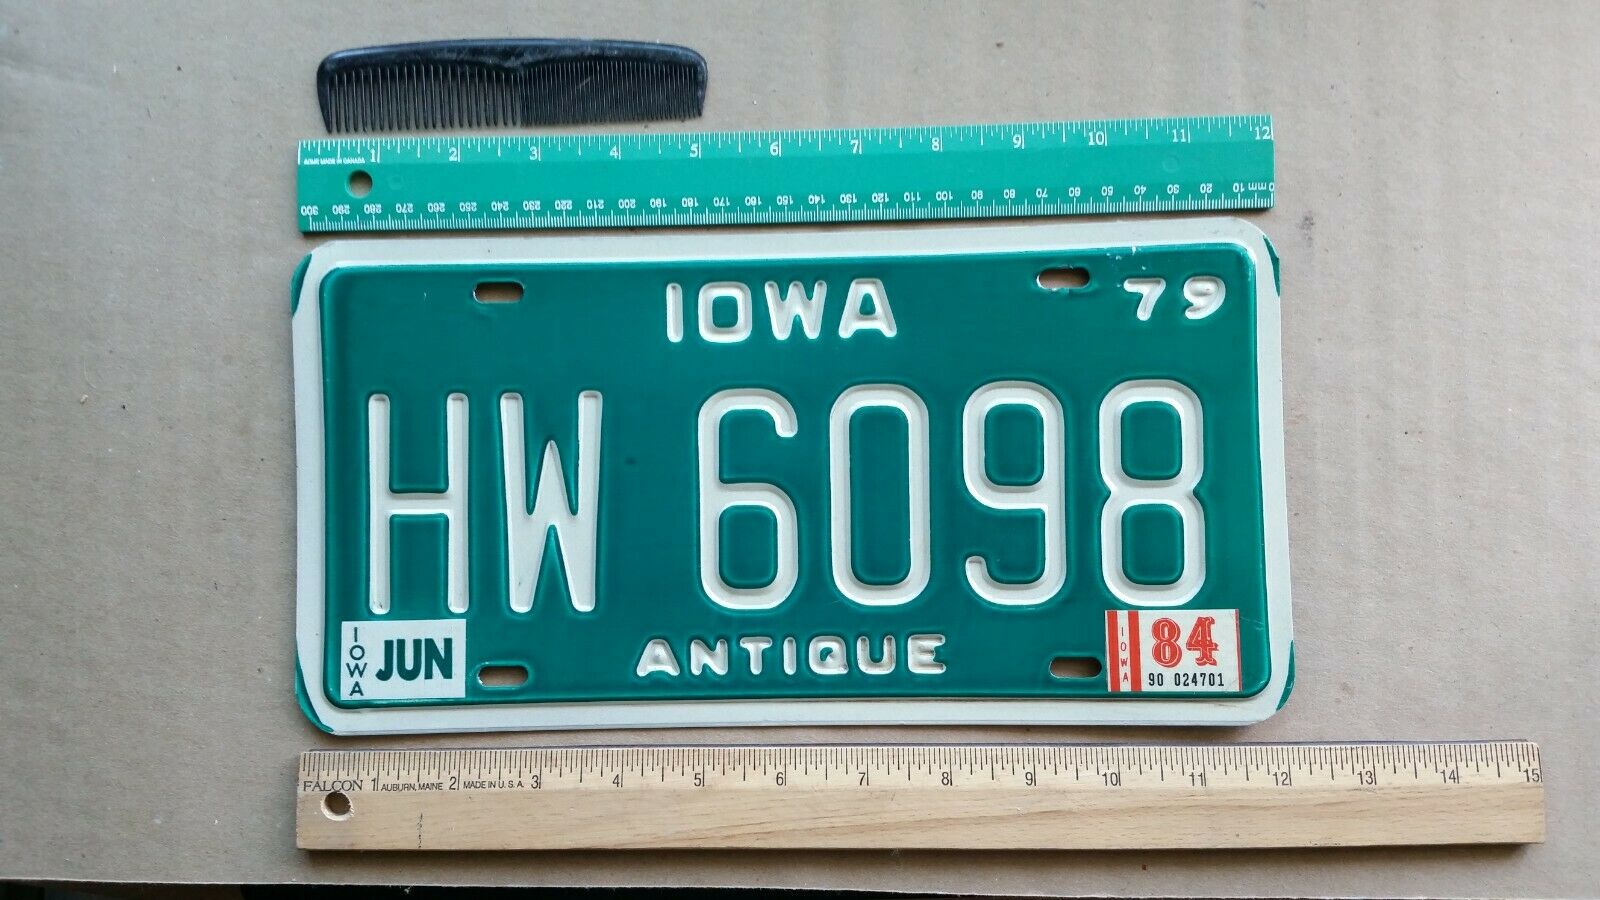 License Plate, Iowa, 1979, Antique (auto), Hw 6098, Debossed Lettering